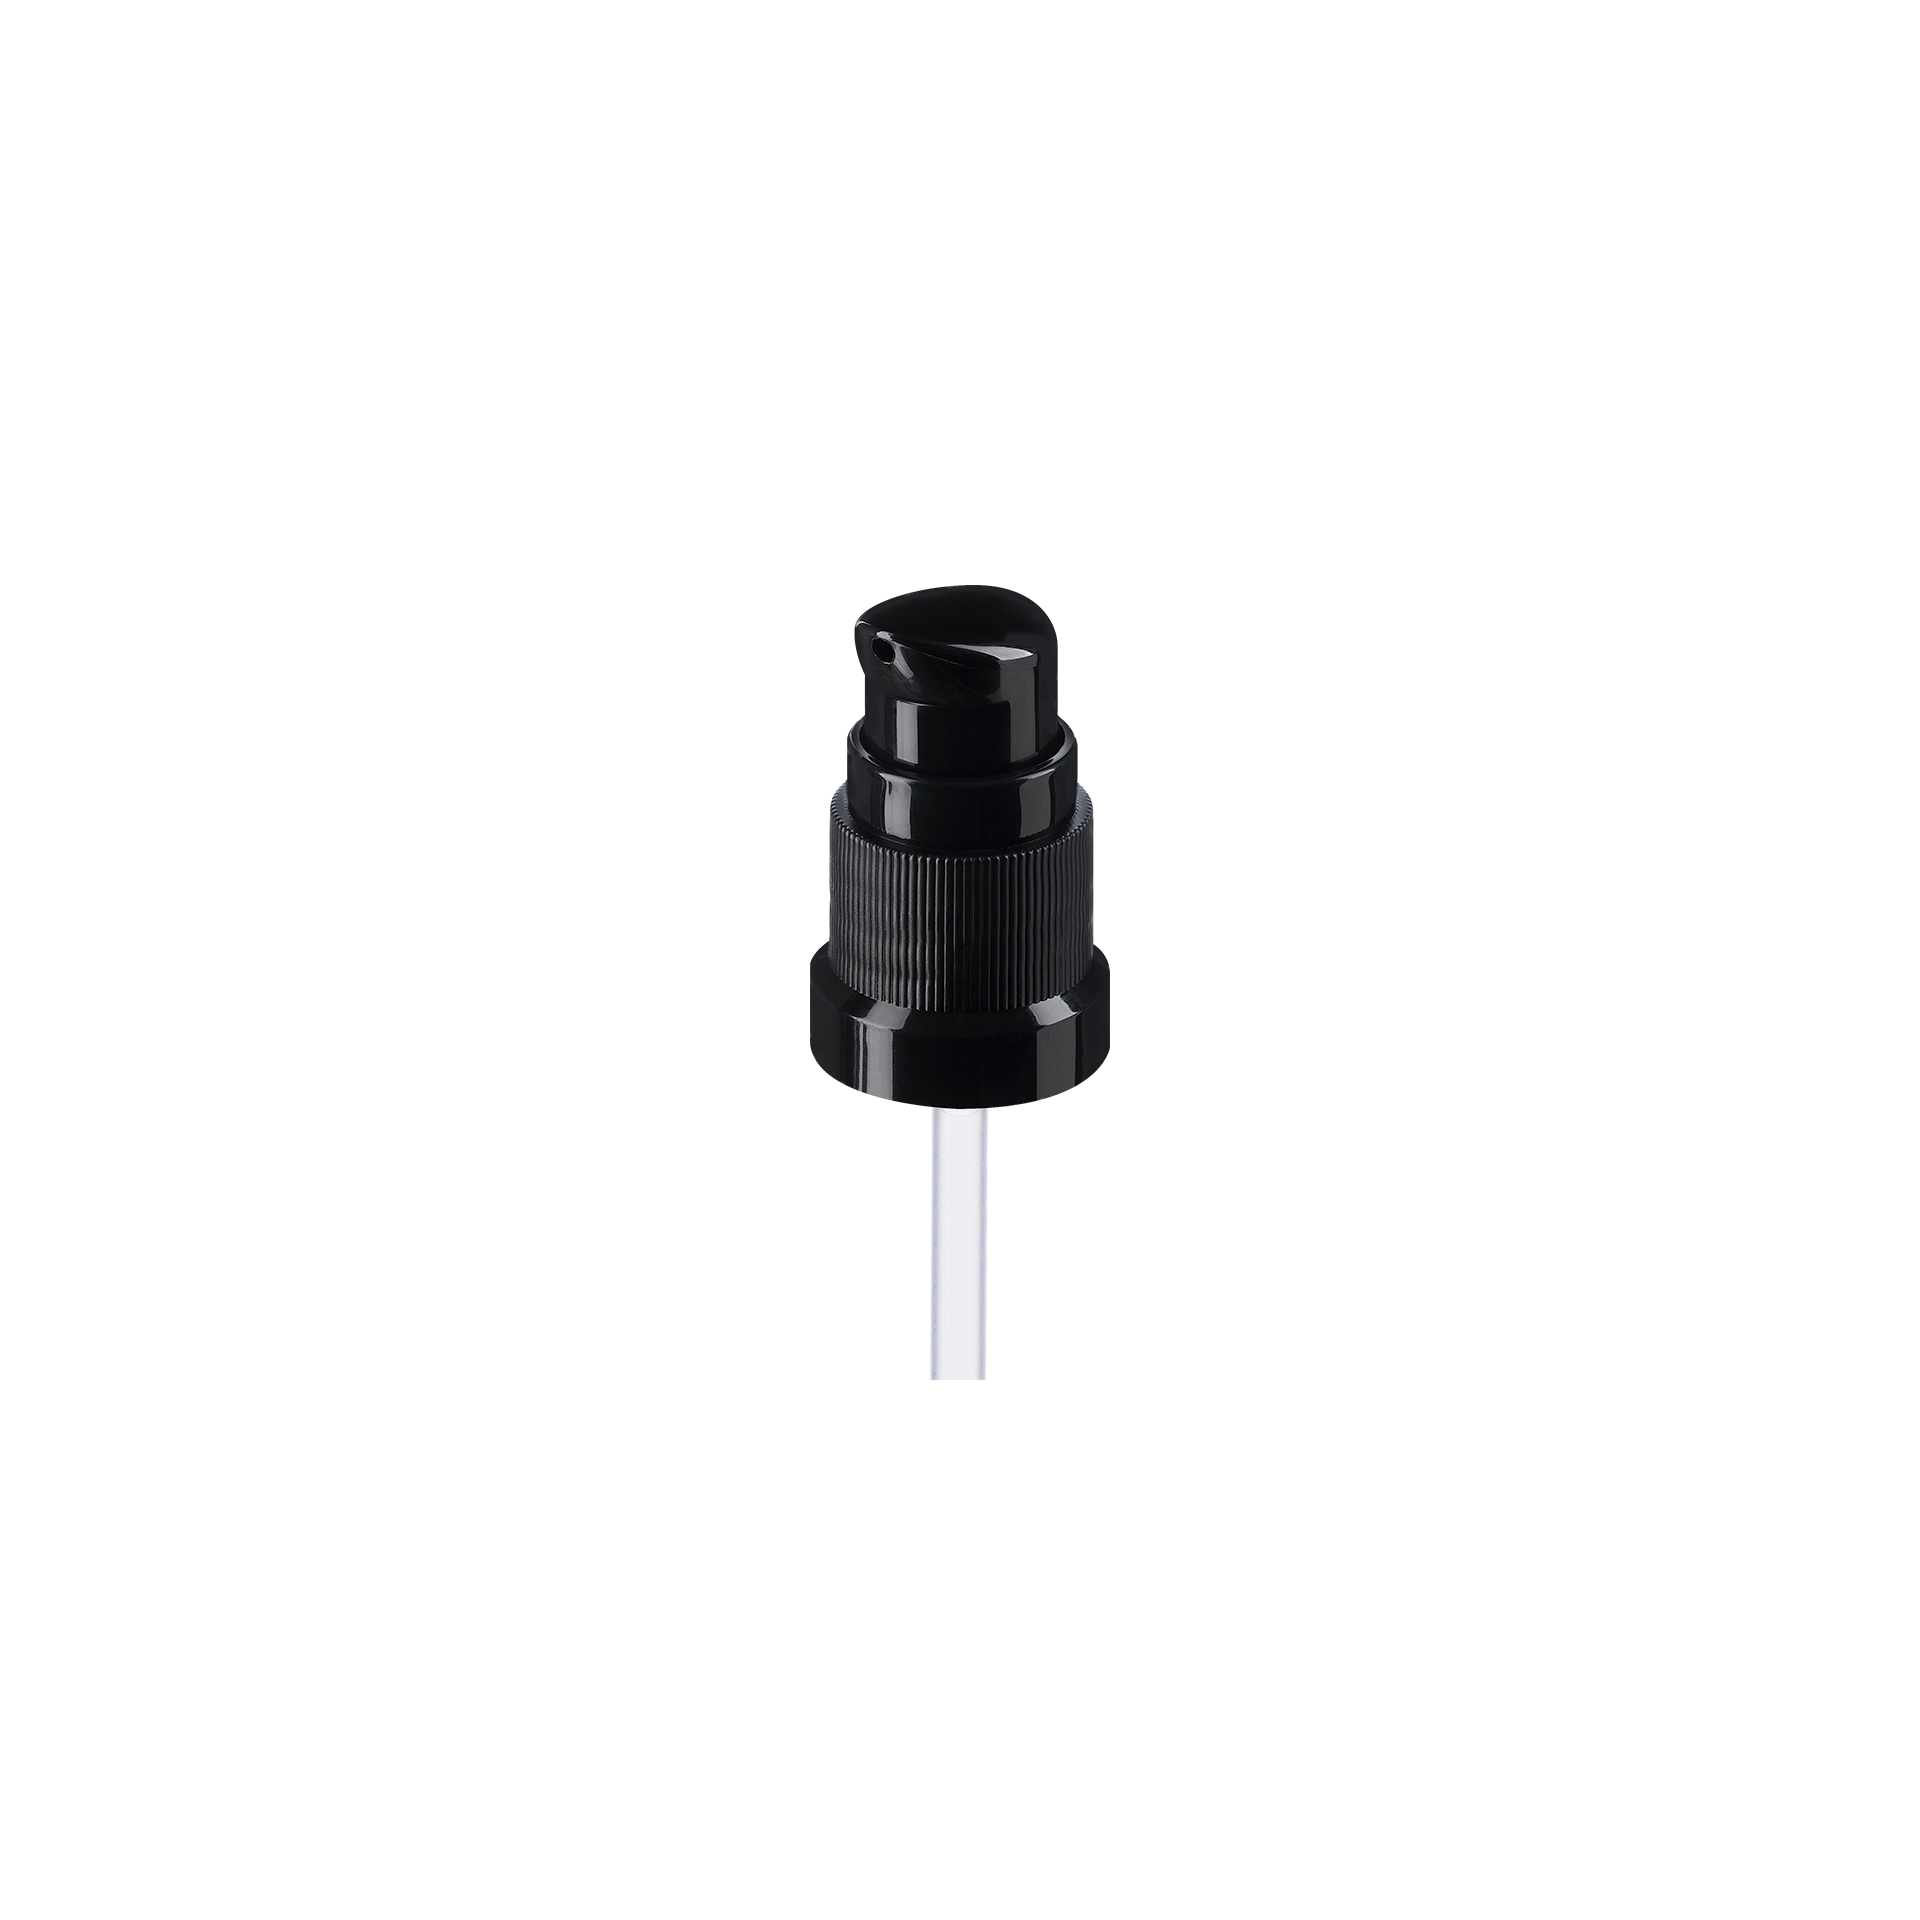 Lotion pump Metropolitan DIN18, PP, black, dose 0.15ml, black security clip (Jasmine 5)